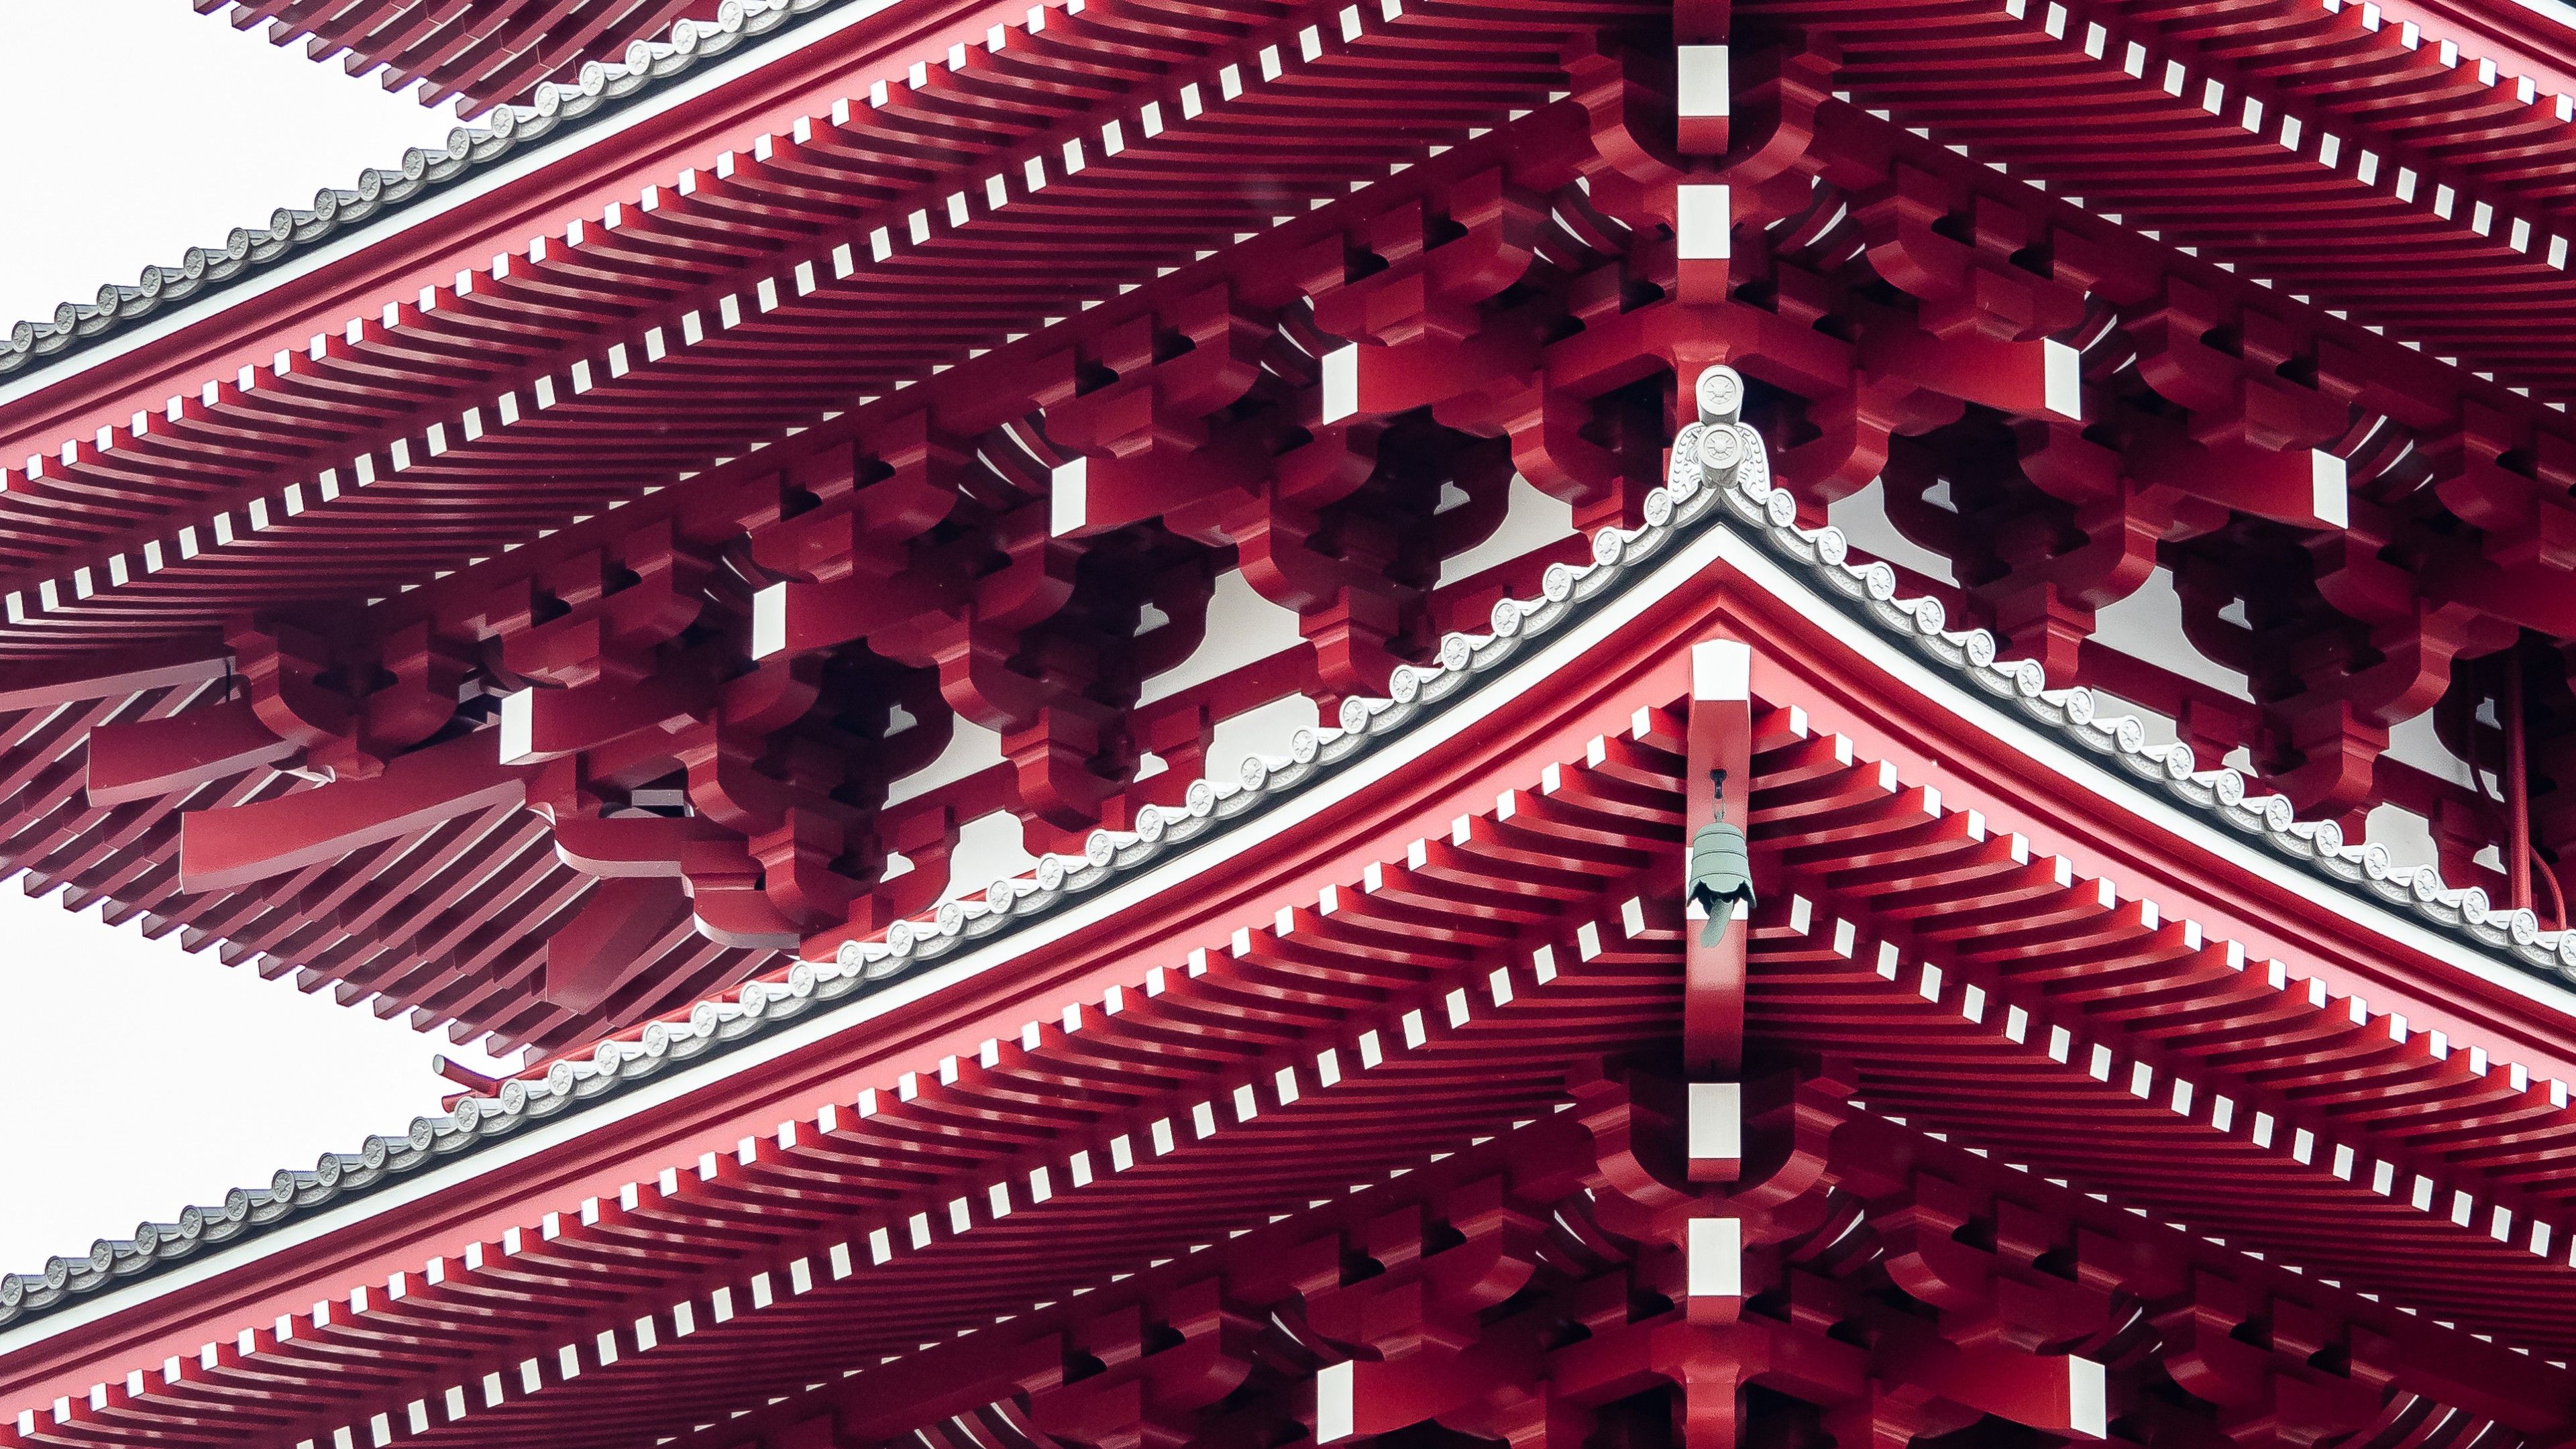 Pagoda 4K Wallpaper, Tokyo, Japan, Ancient architecture, Buddhism, Red, World